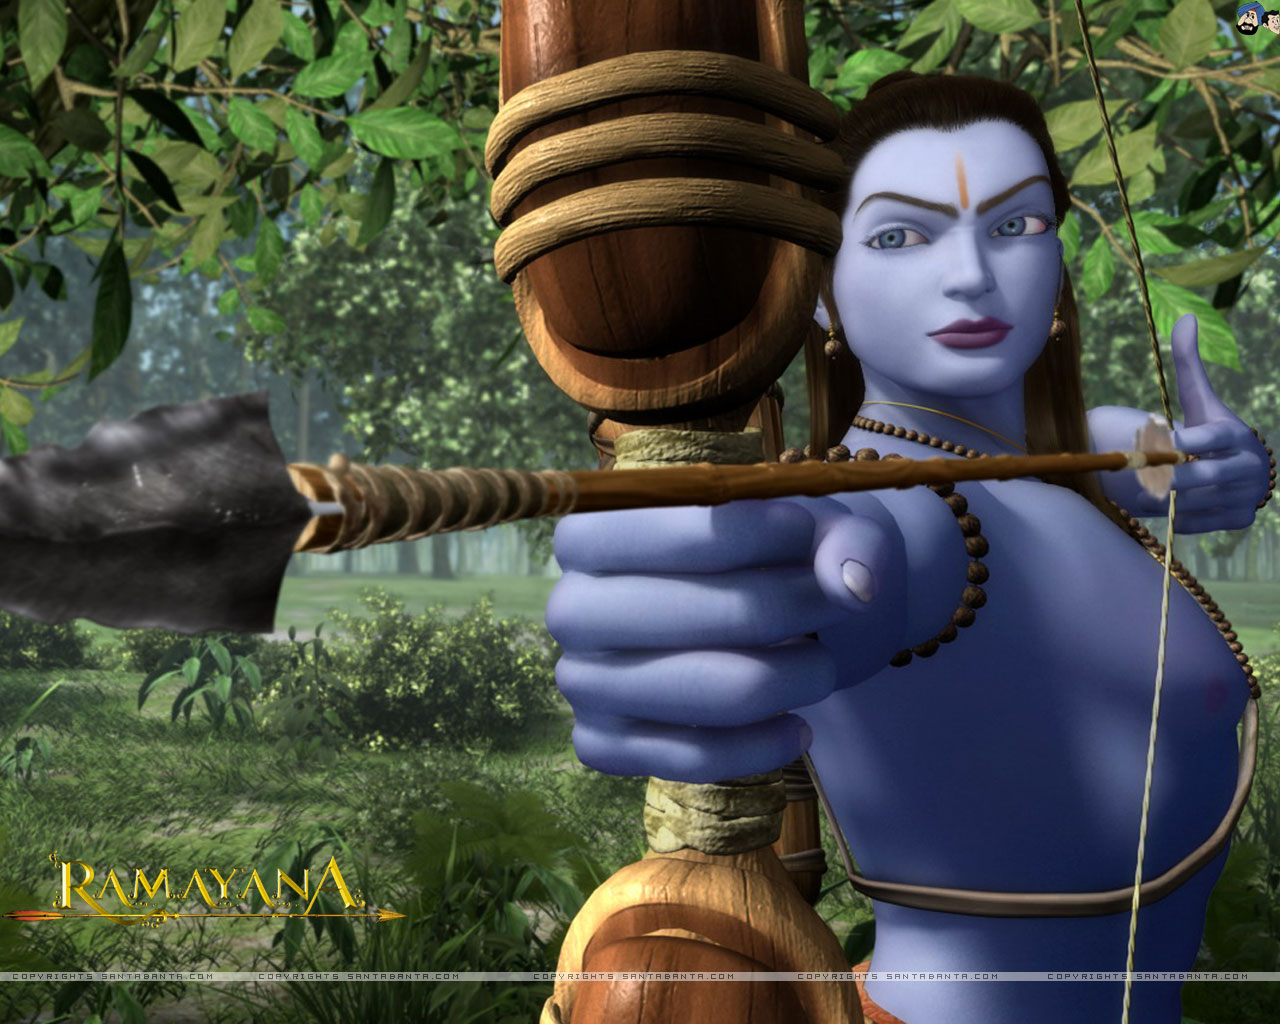 ramayana images wallpapers,adventure game,cg artwork,animation,games,tree